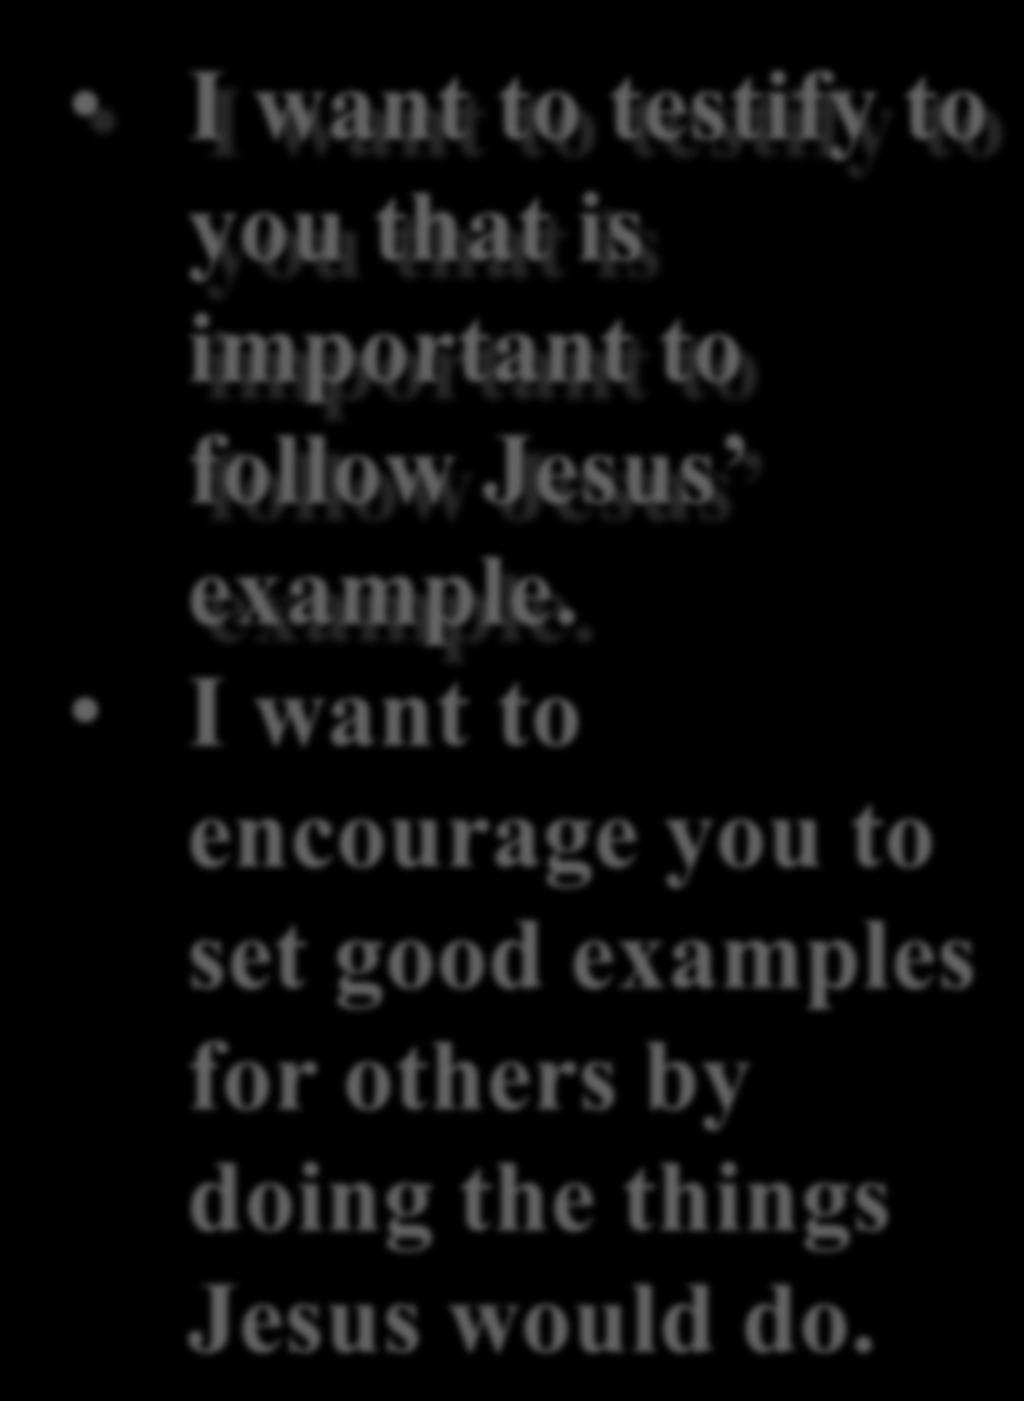 I want to encourage you to set good